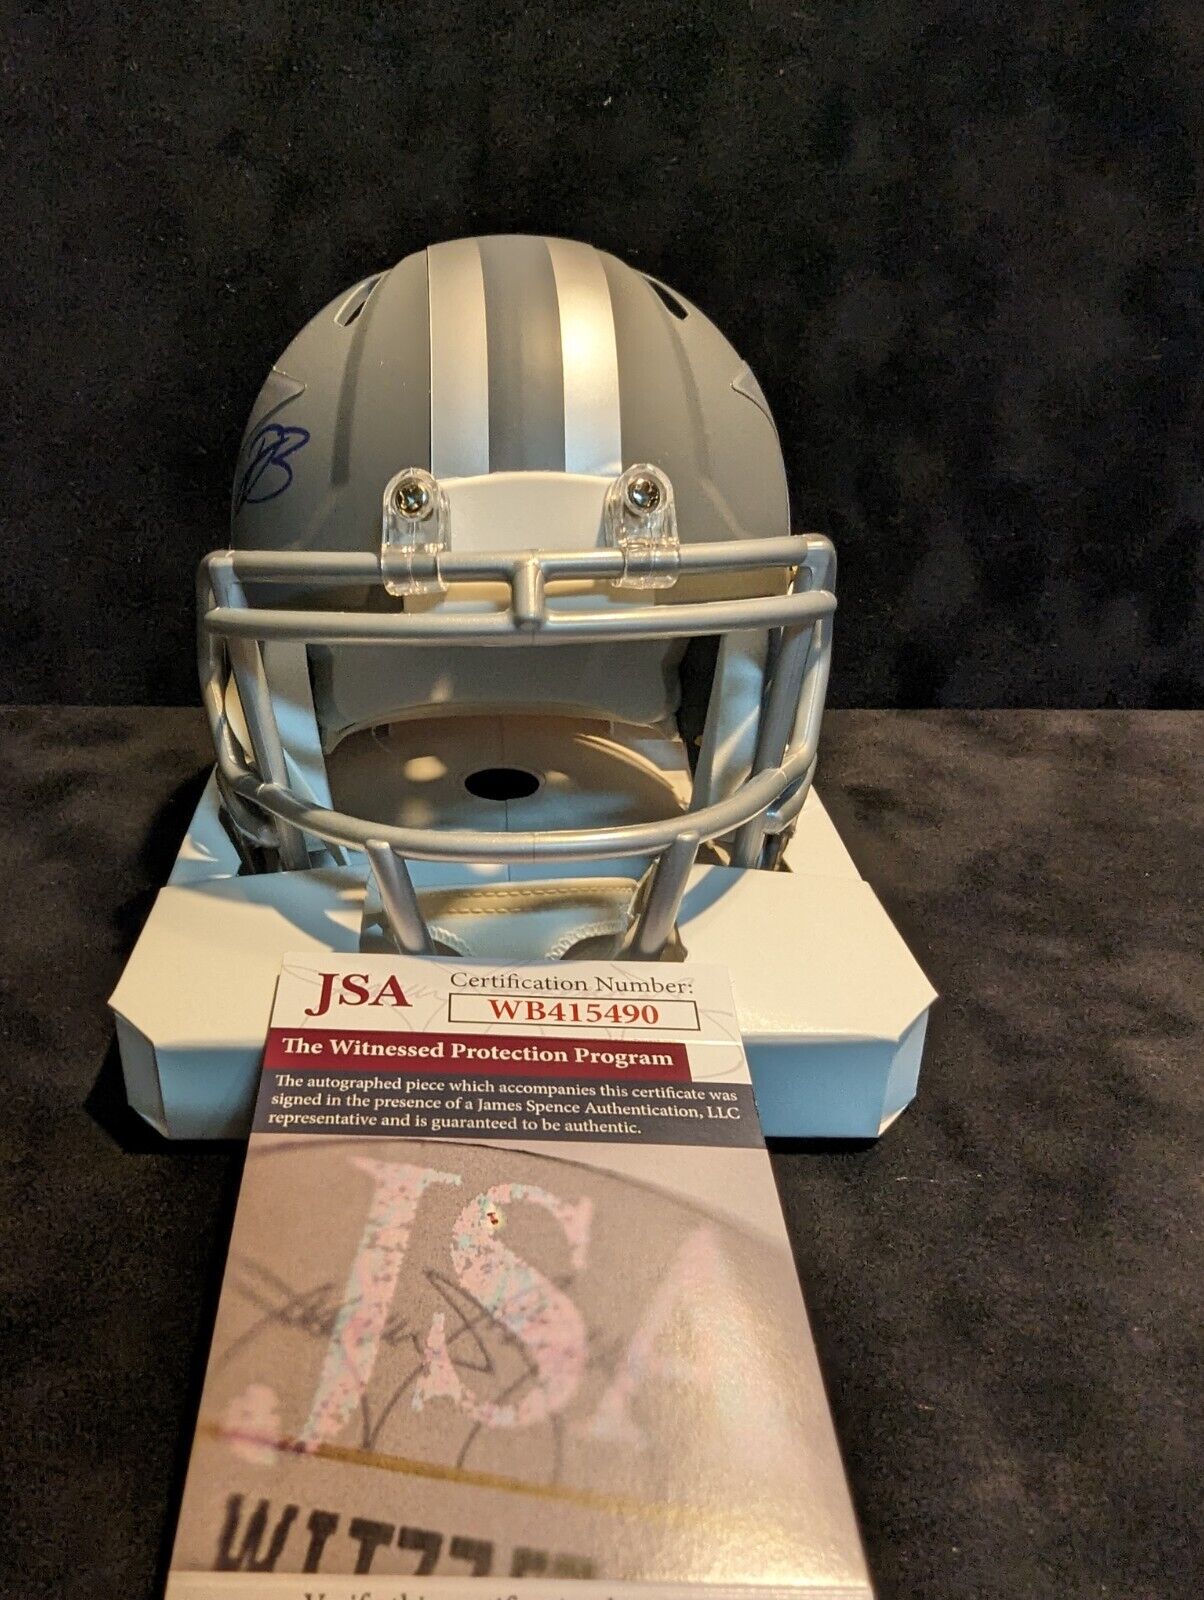 Dallas Cowboys Daron Bland Autographed Signed Slate Mini Helmet Jsa Coa